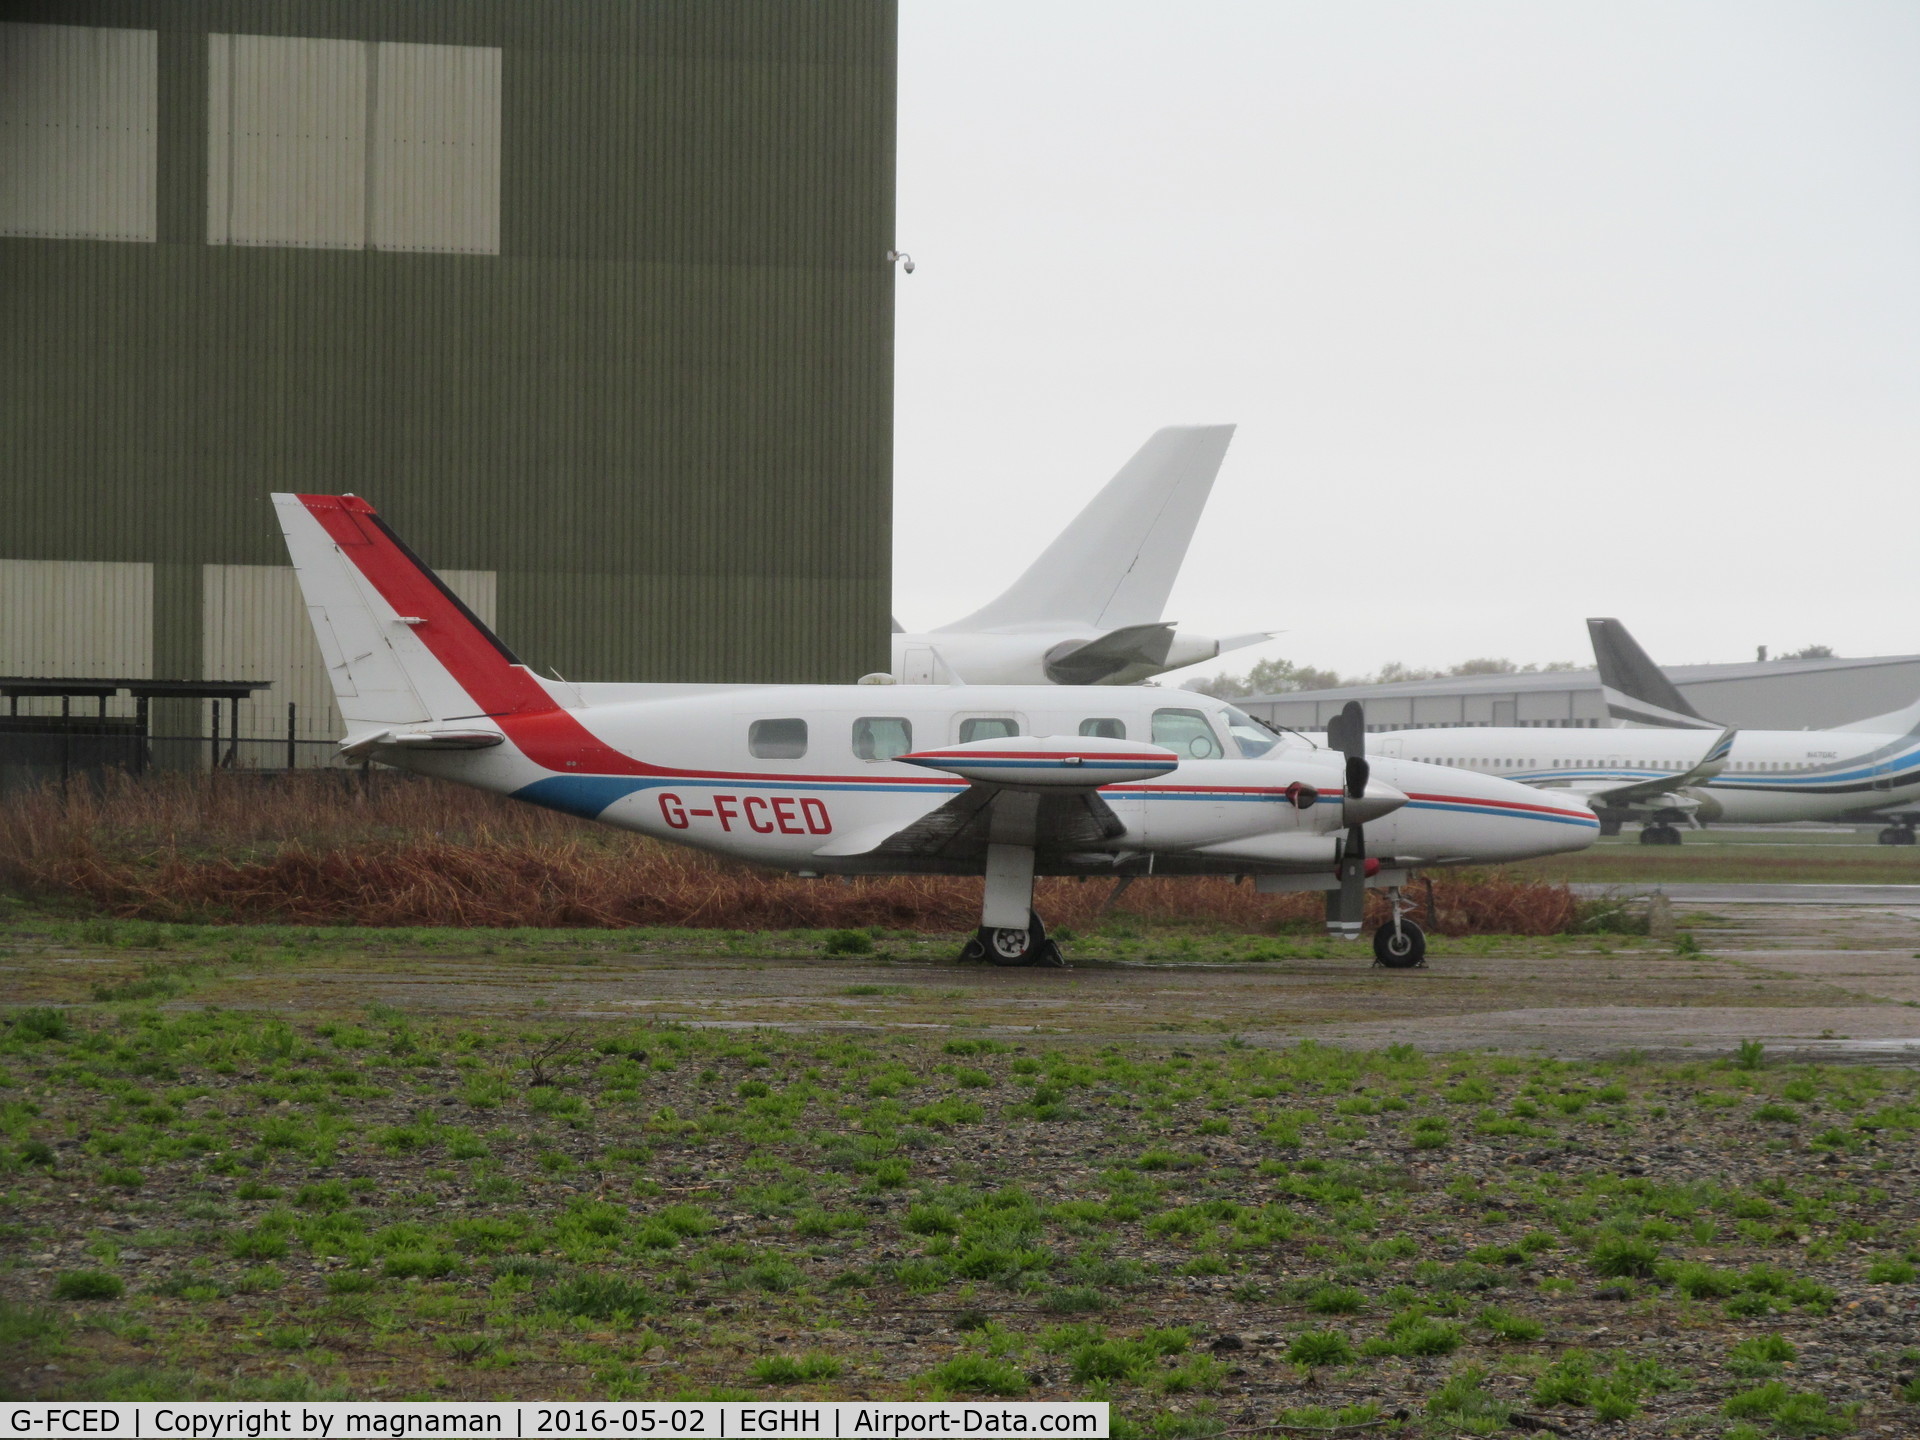 G-FCED, 1981 Piper PA-31T2-620 Cheyenne IIXL C/N 31T-8166013, nice Cheyenne at hurn - hiding behind old AIM hangar